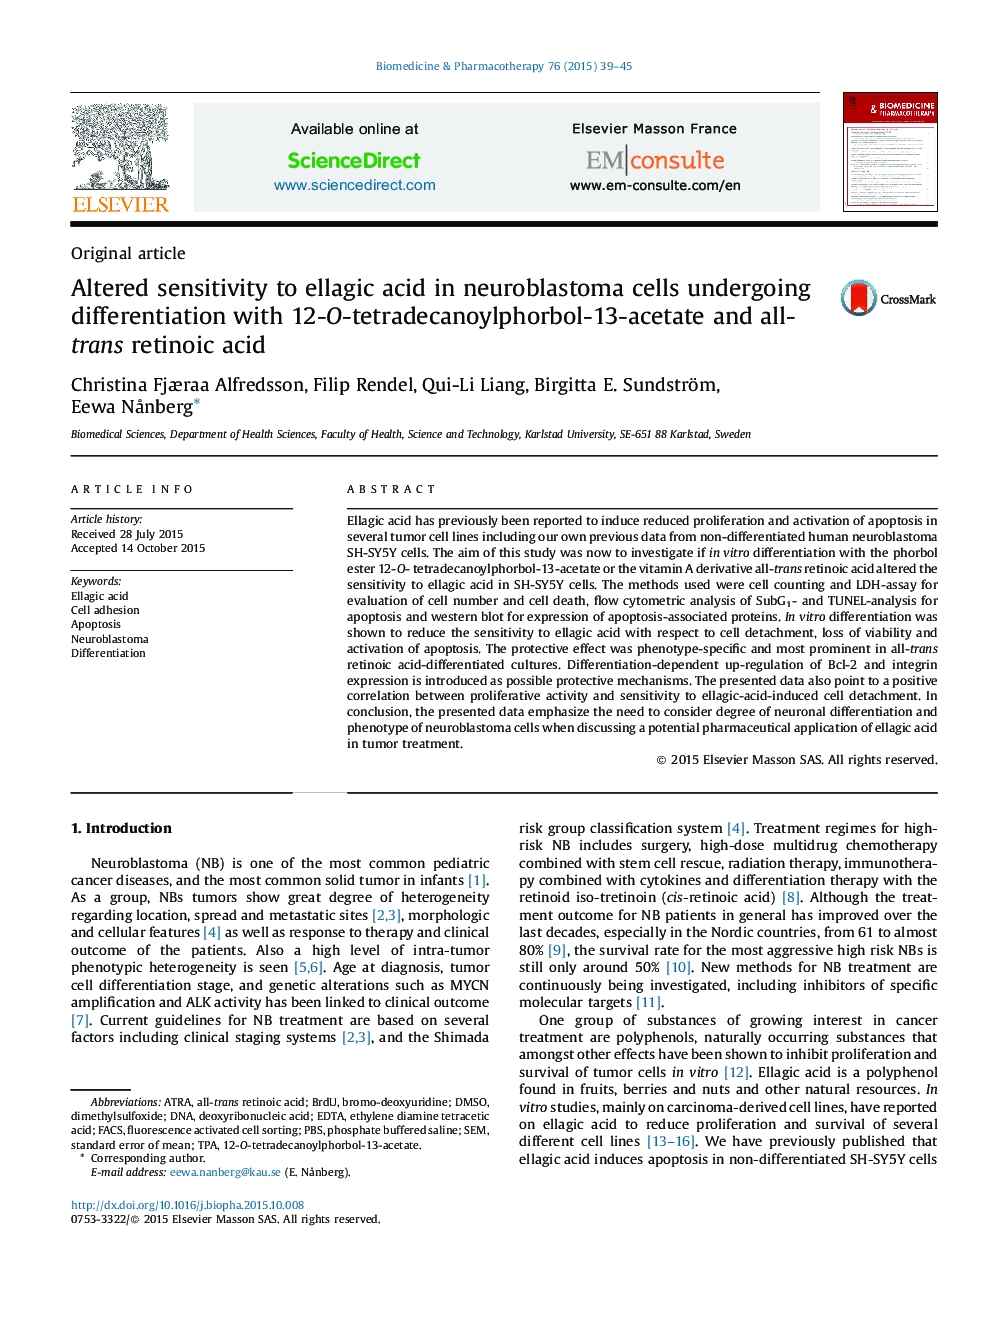 Altered sensitivity to ellagic acid in neuroblastoma cells undergoing differentiation with 12-O-tetradecanoylphorbol-13-acetate and all-trans retinoic acid